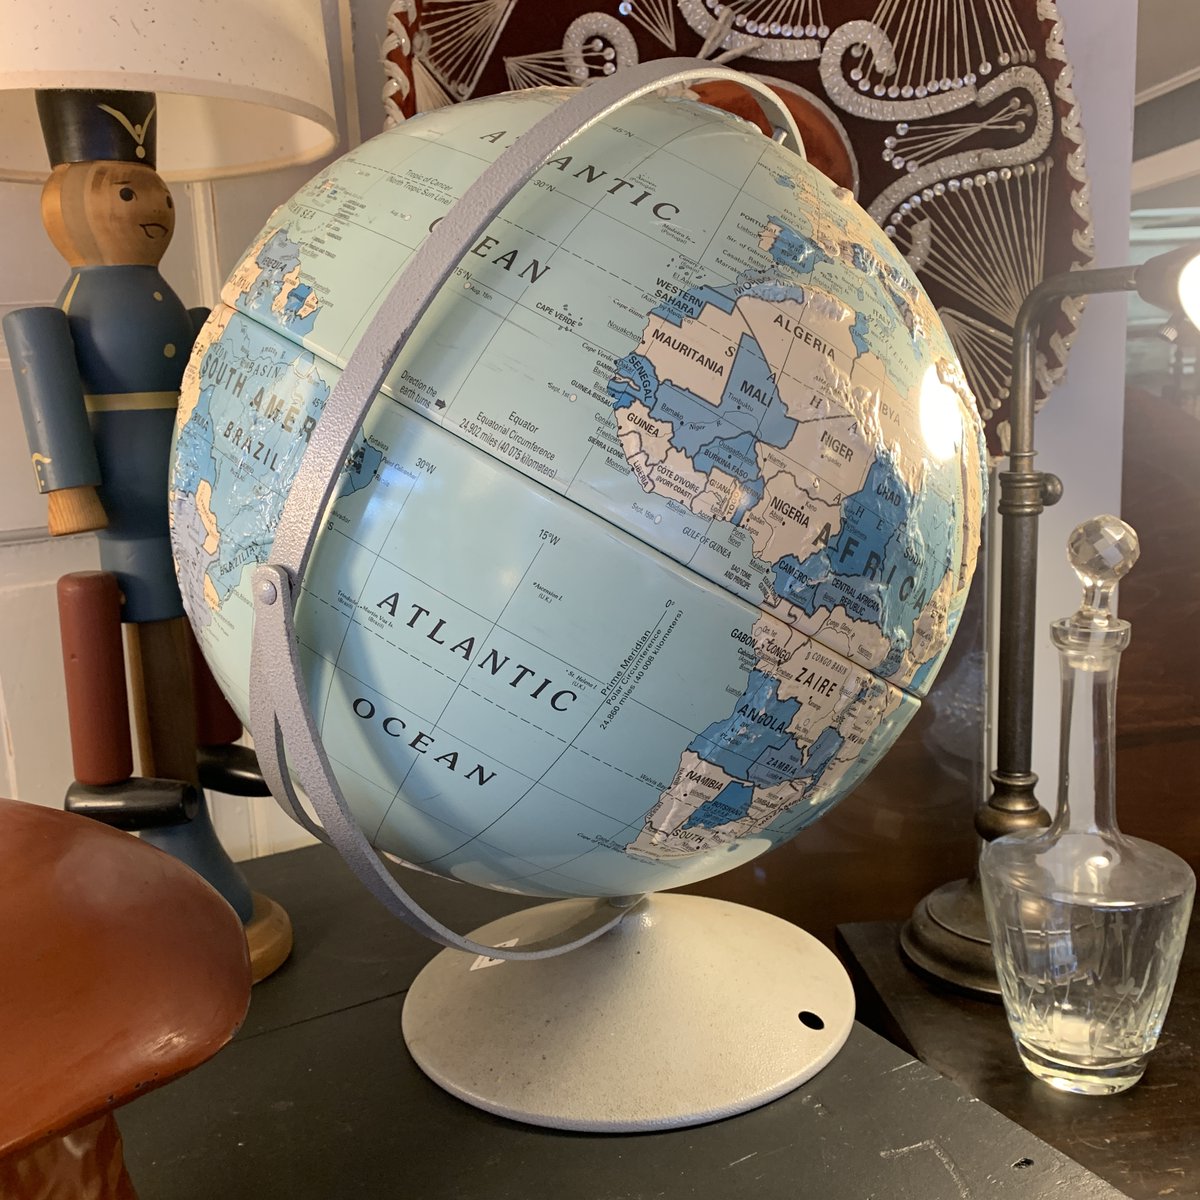 Vintage Globe
.
.
.
#school #globe #vintageglobe #simonvintage #antiqueshop #vintageshop #jerseyshore